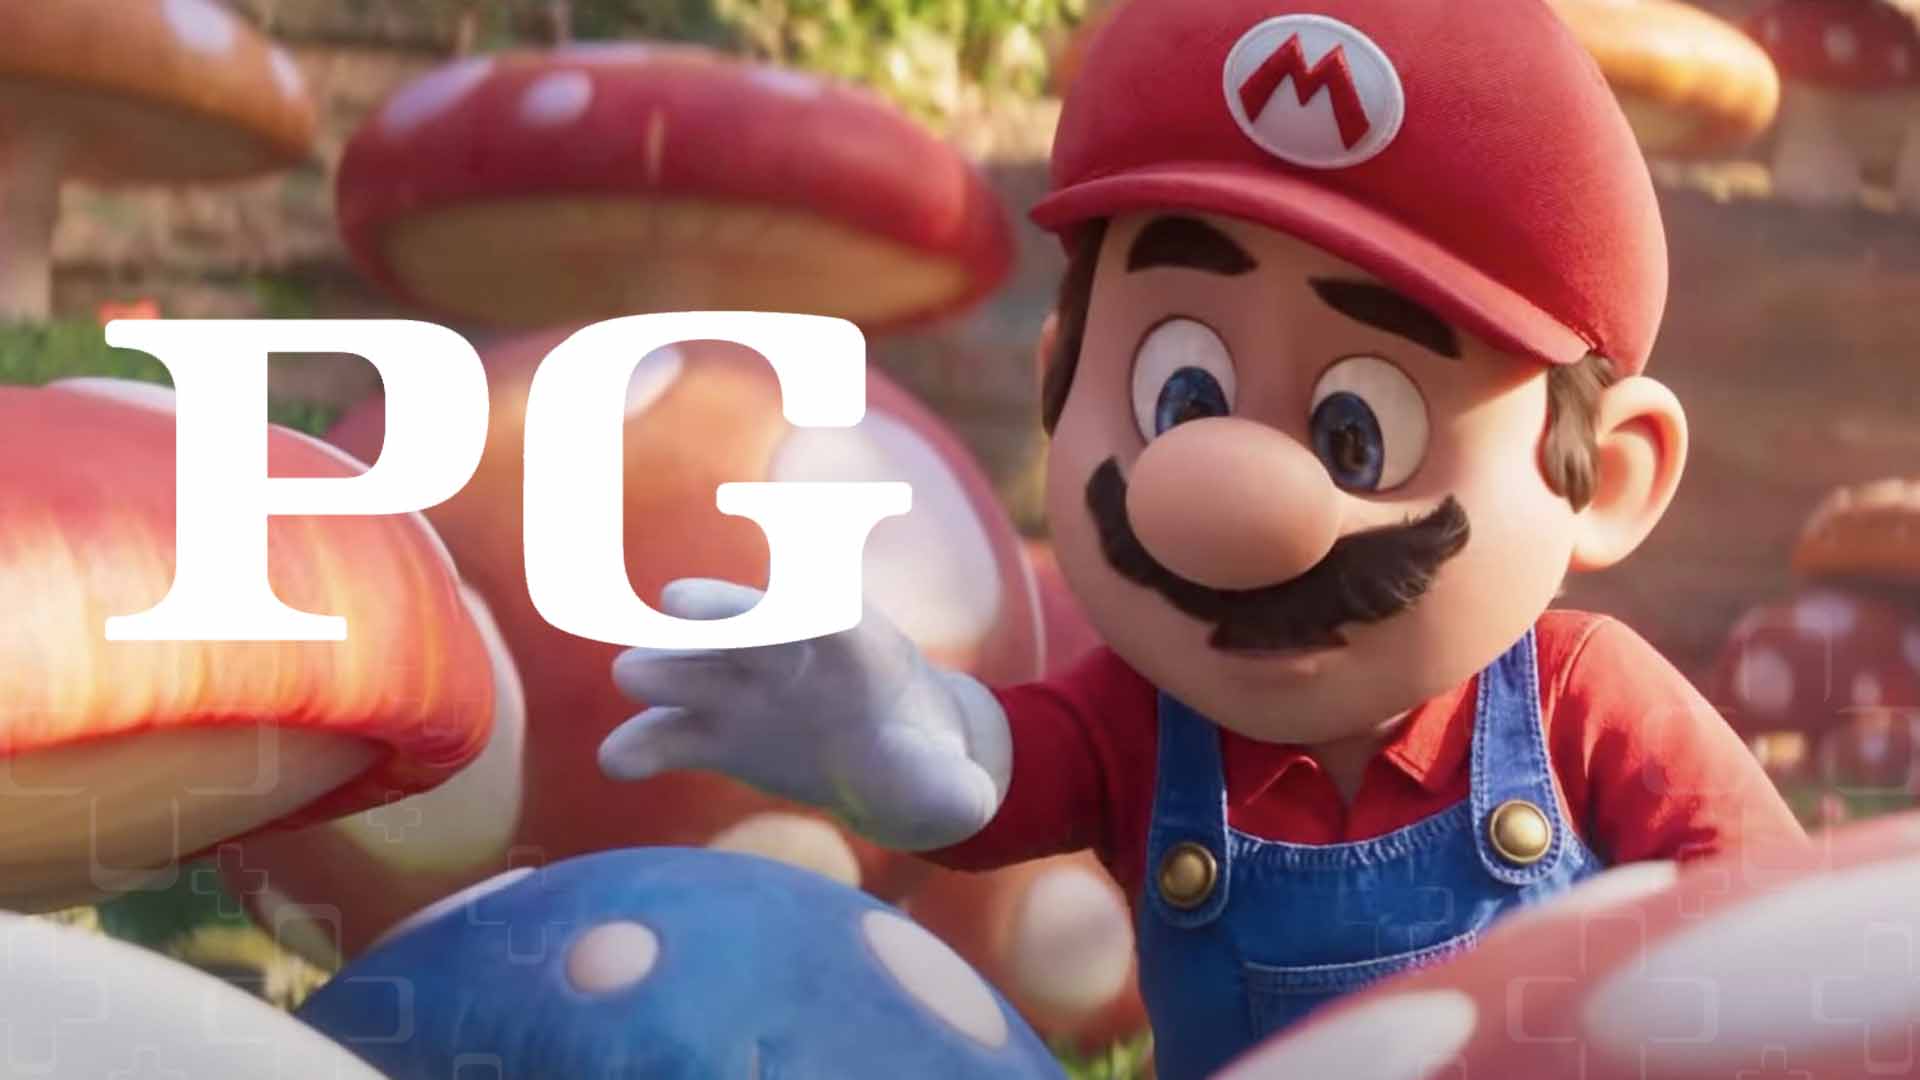 Super Mario Bros. Movie receives MPAA rating of PG Nintendo Wire